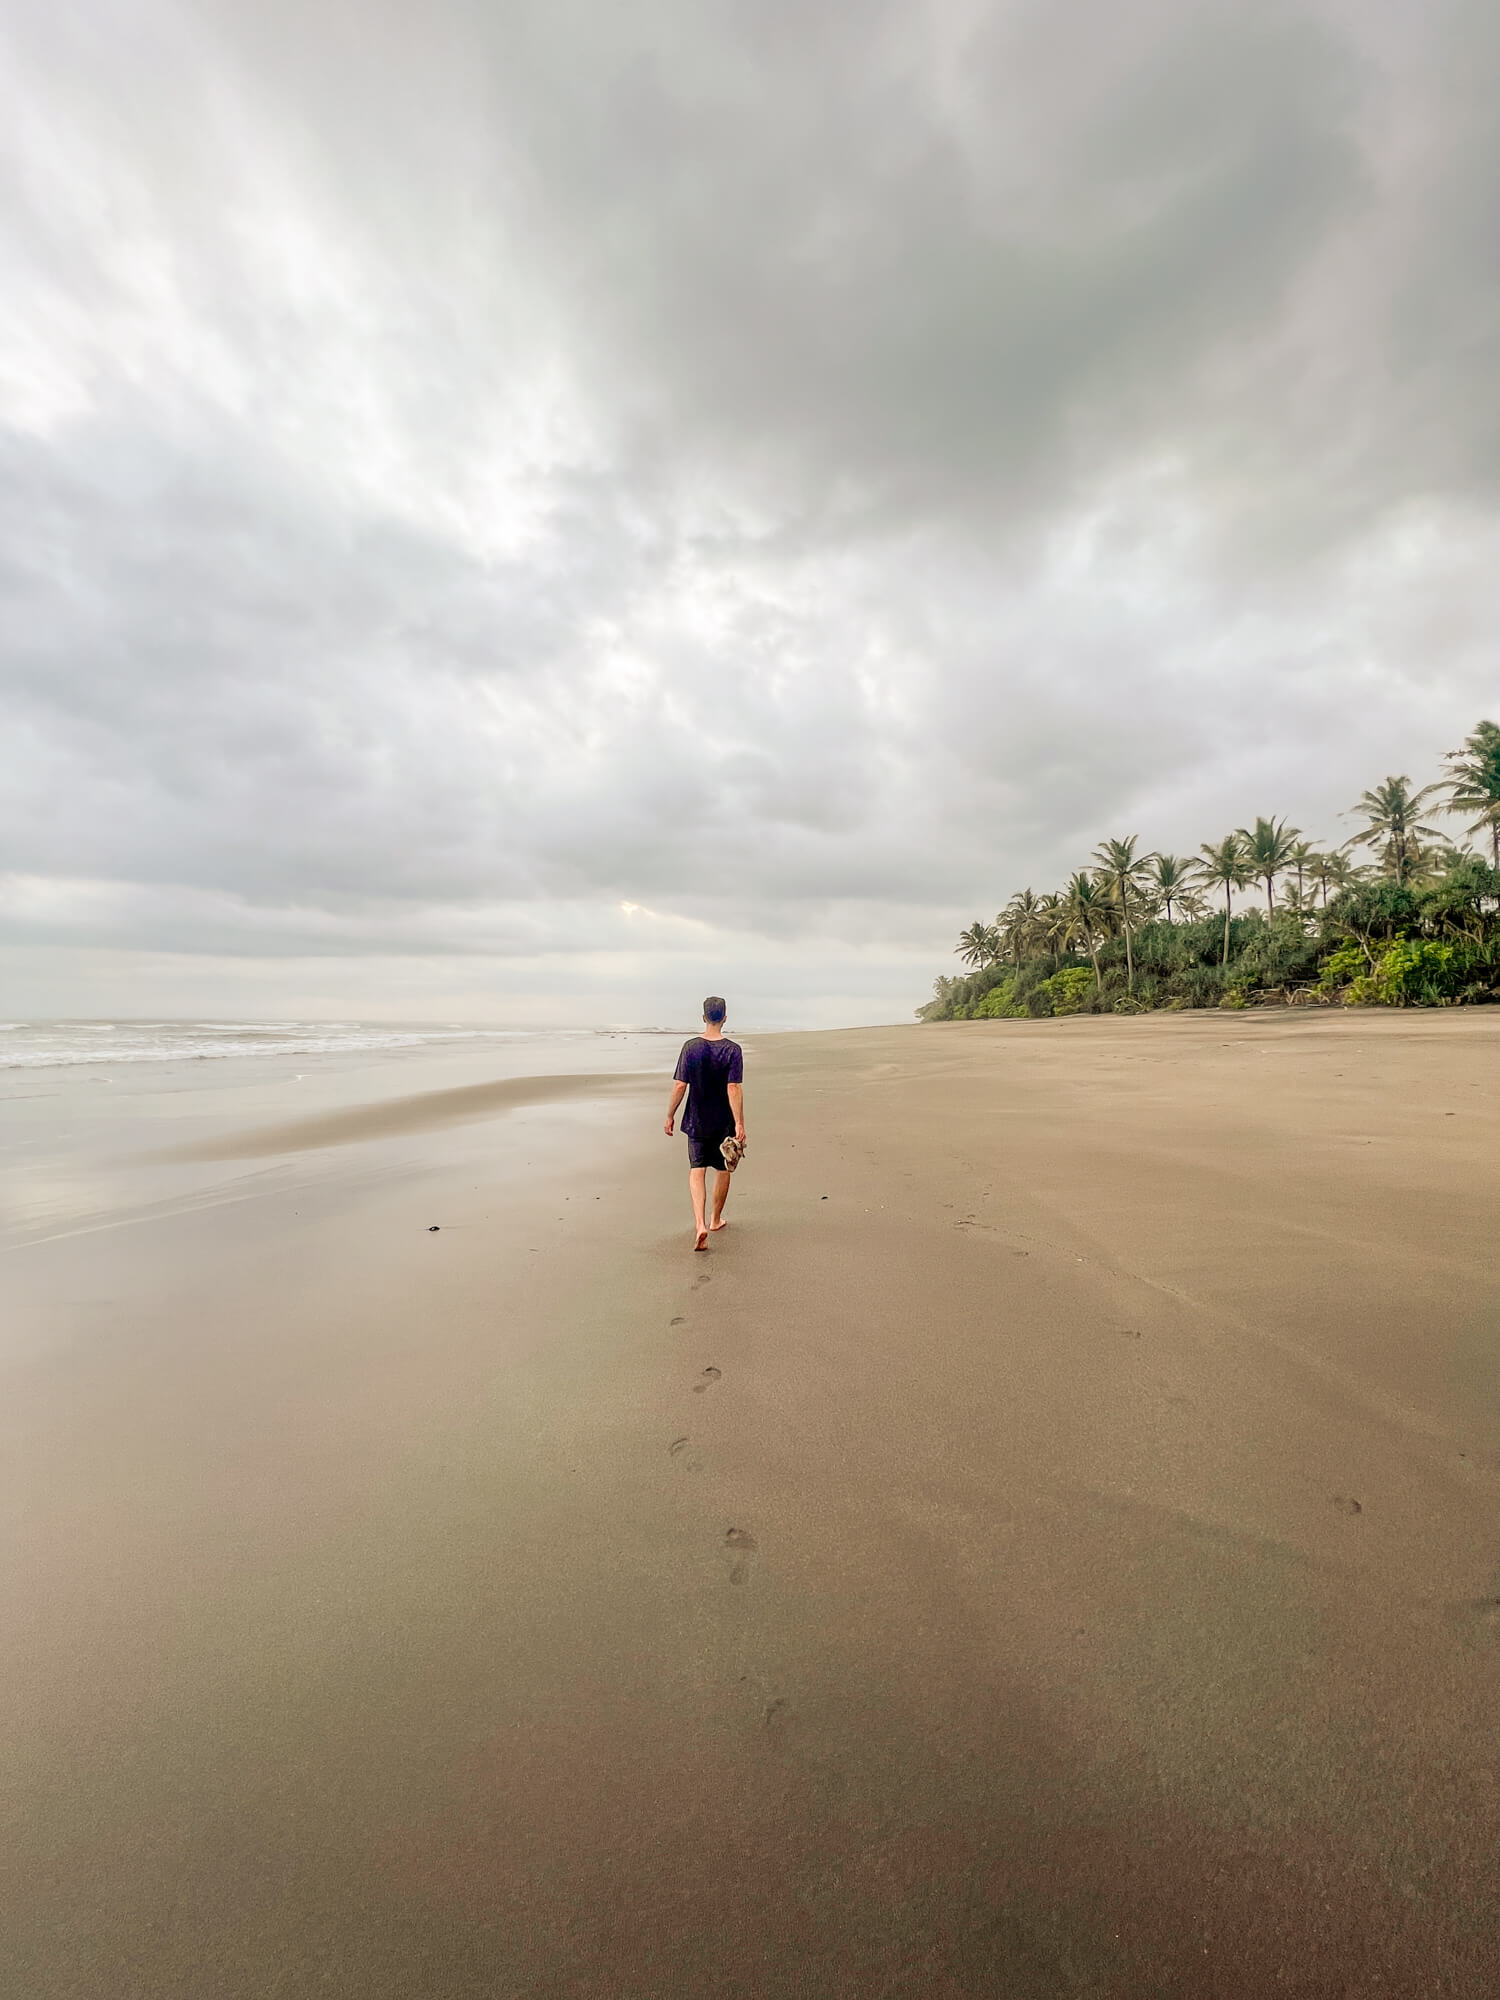 Deserted Beach in Bali